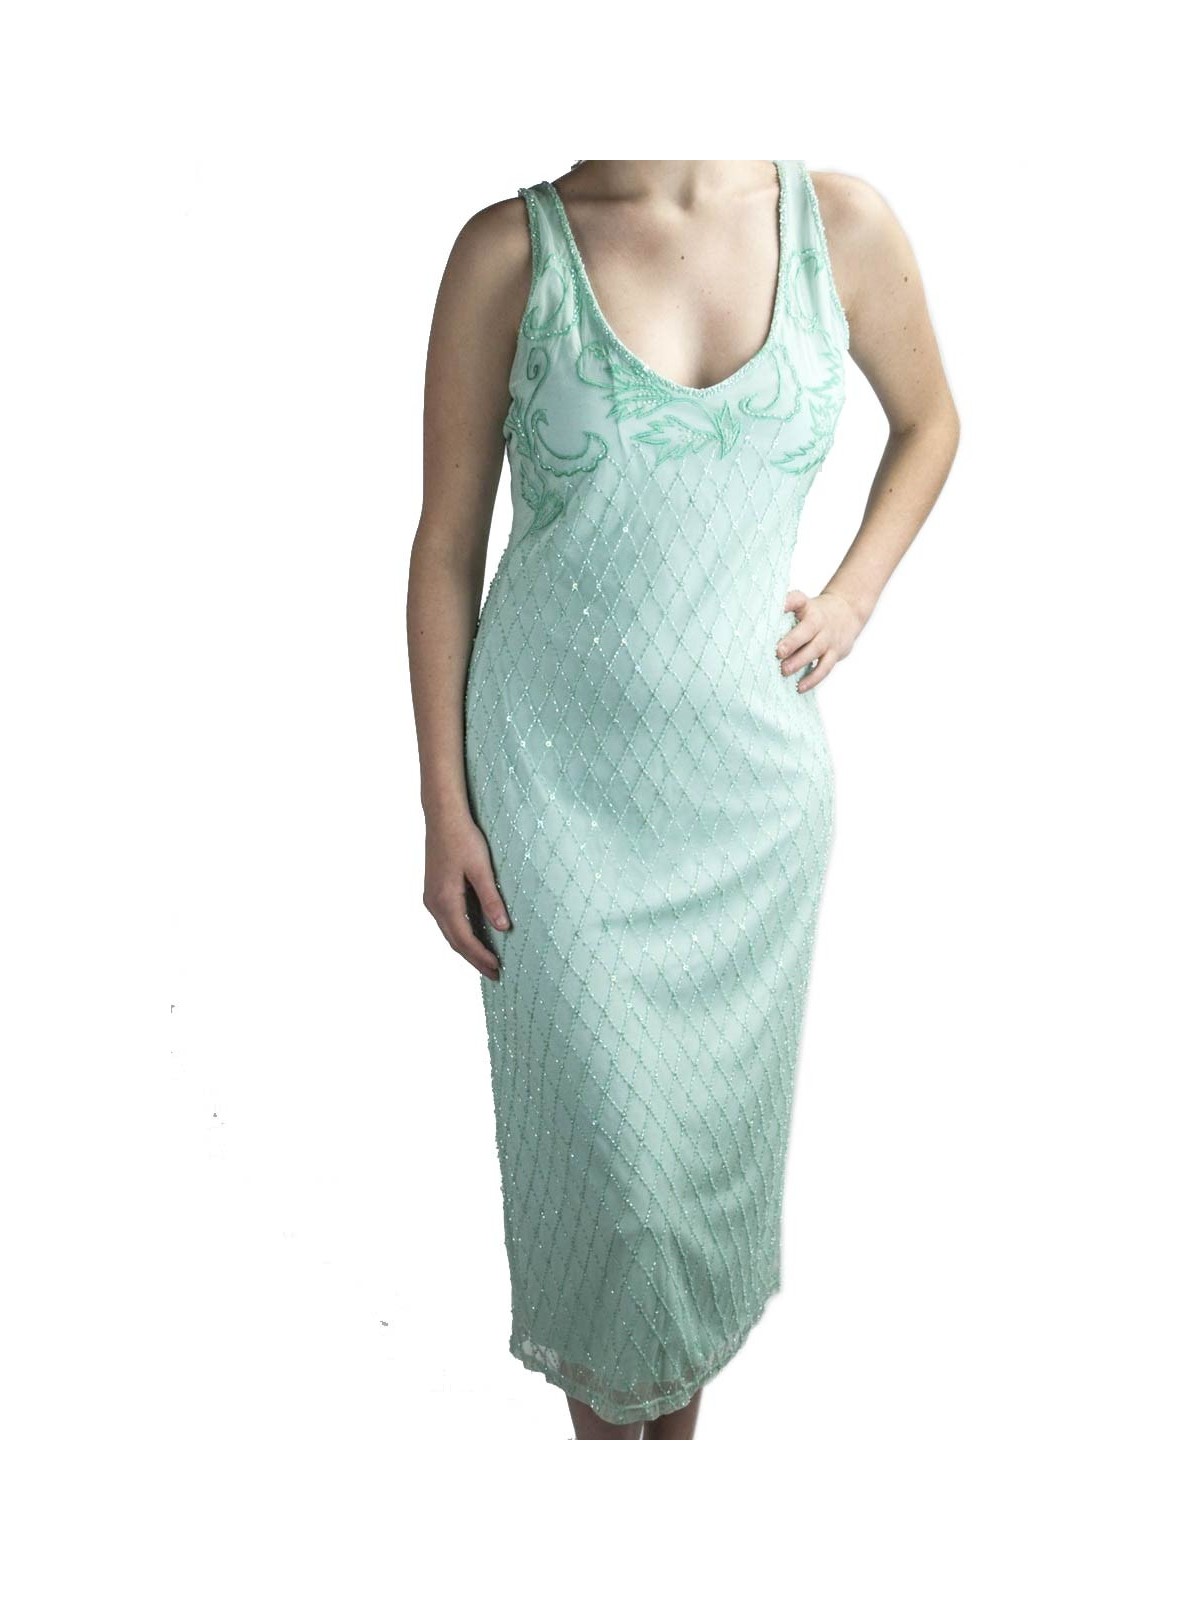 Gown Women's Elegant sheath Dress XL Aquamarine - Beads, Diamonds, and Embroidery